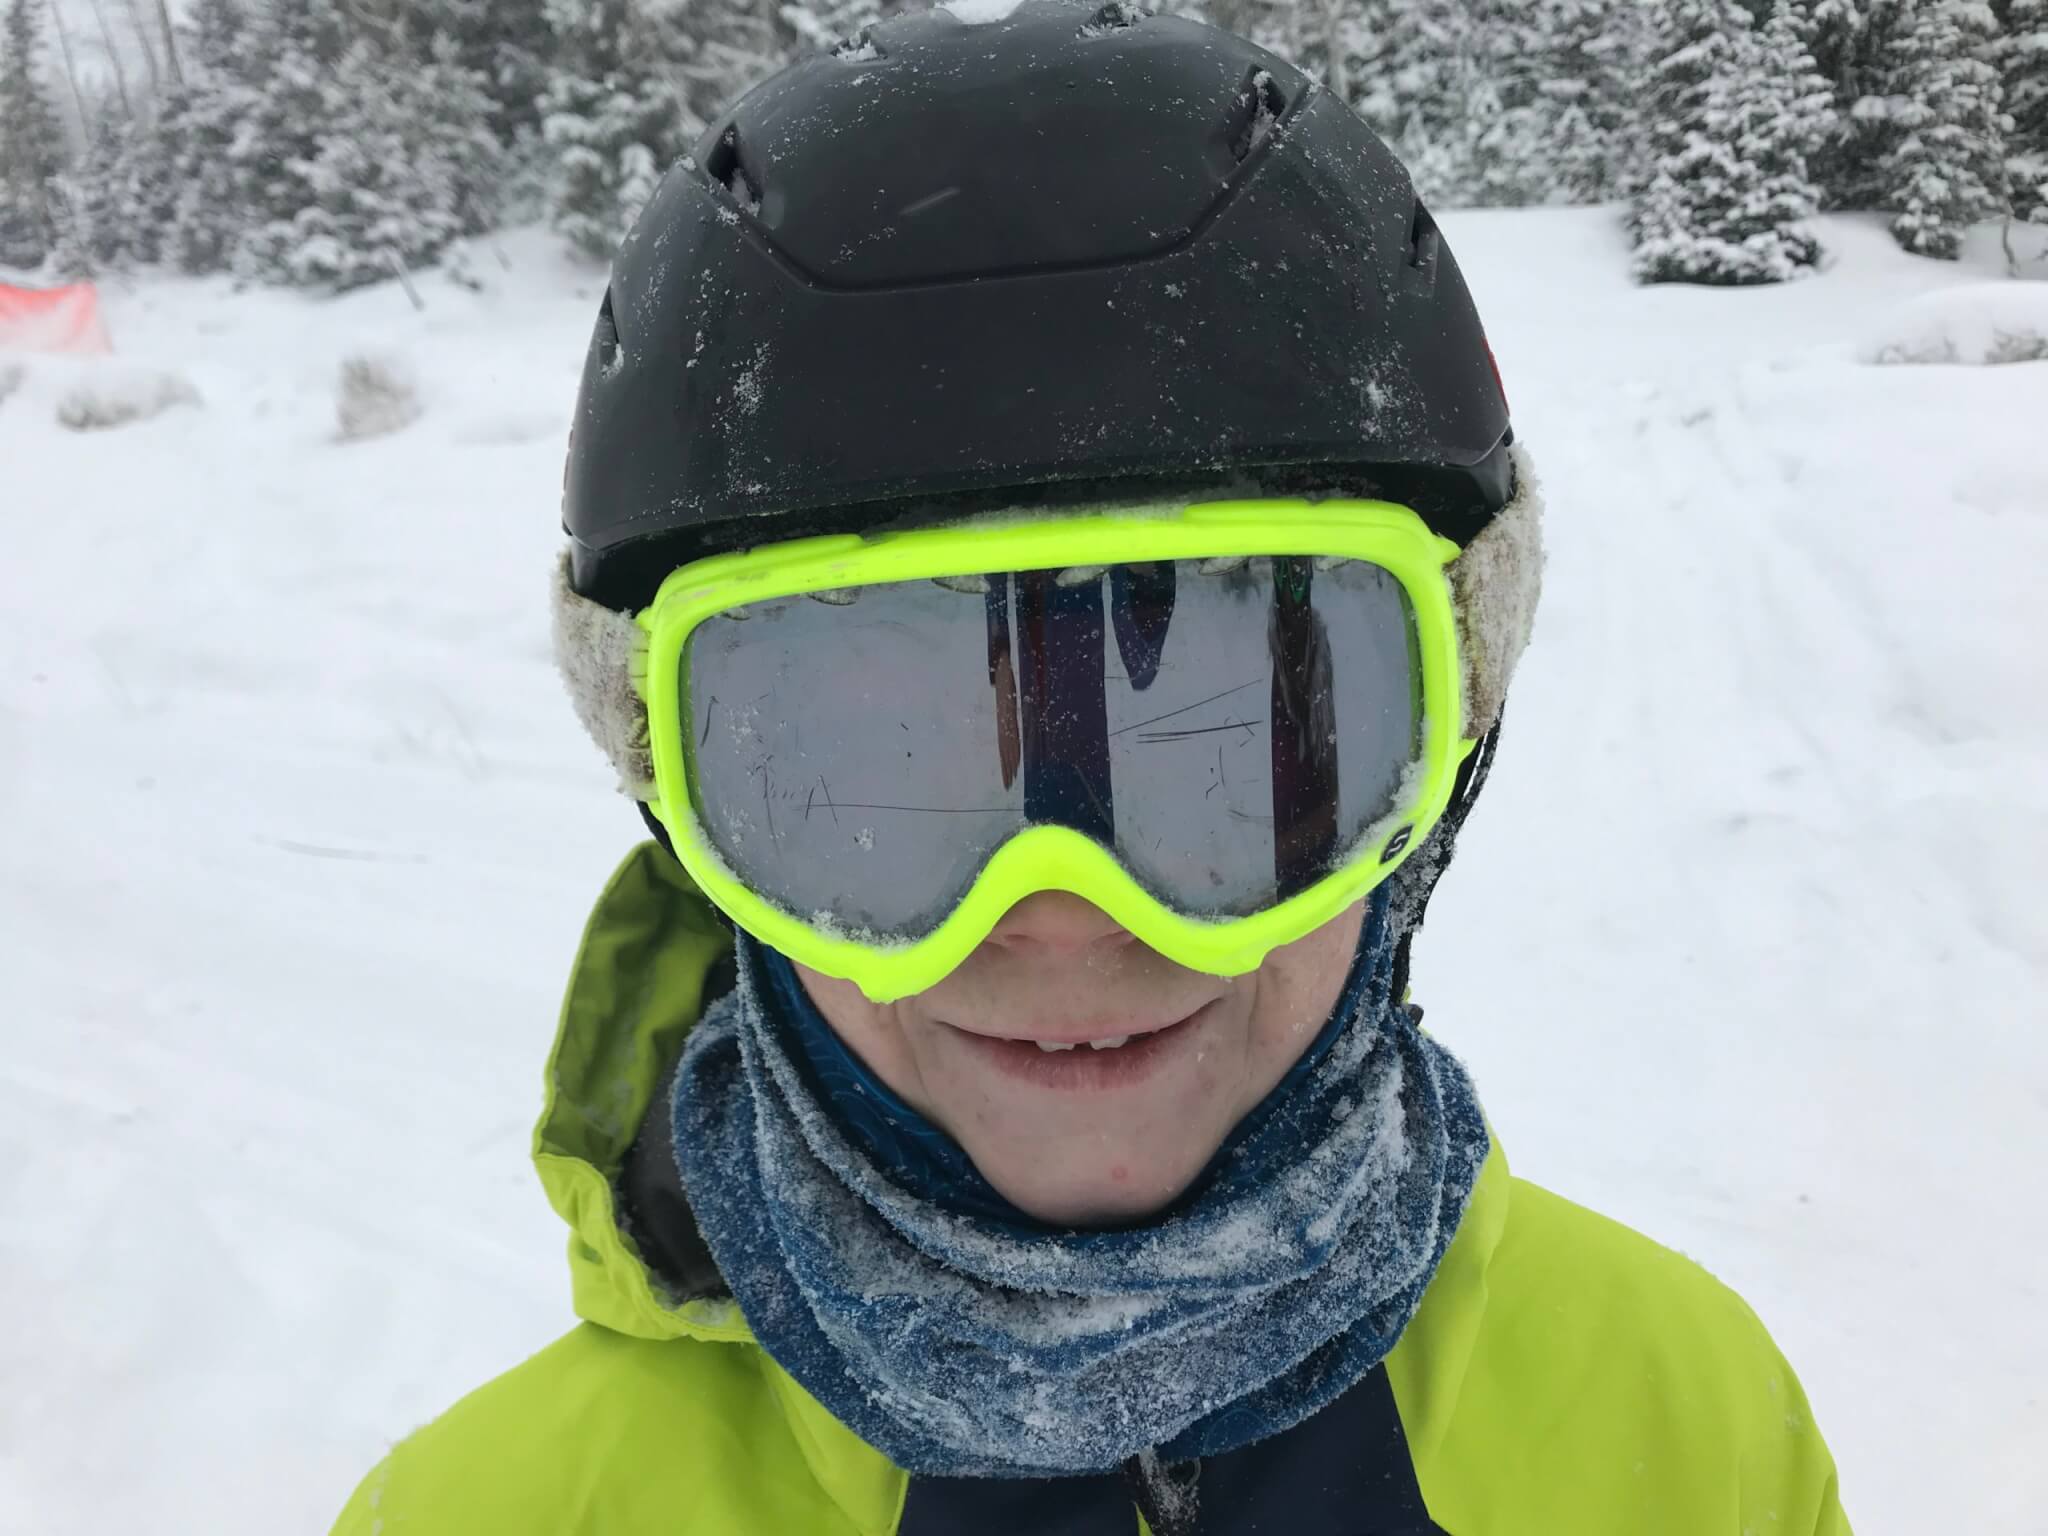 Choosing The Best Ski Gear